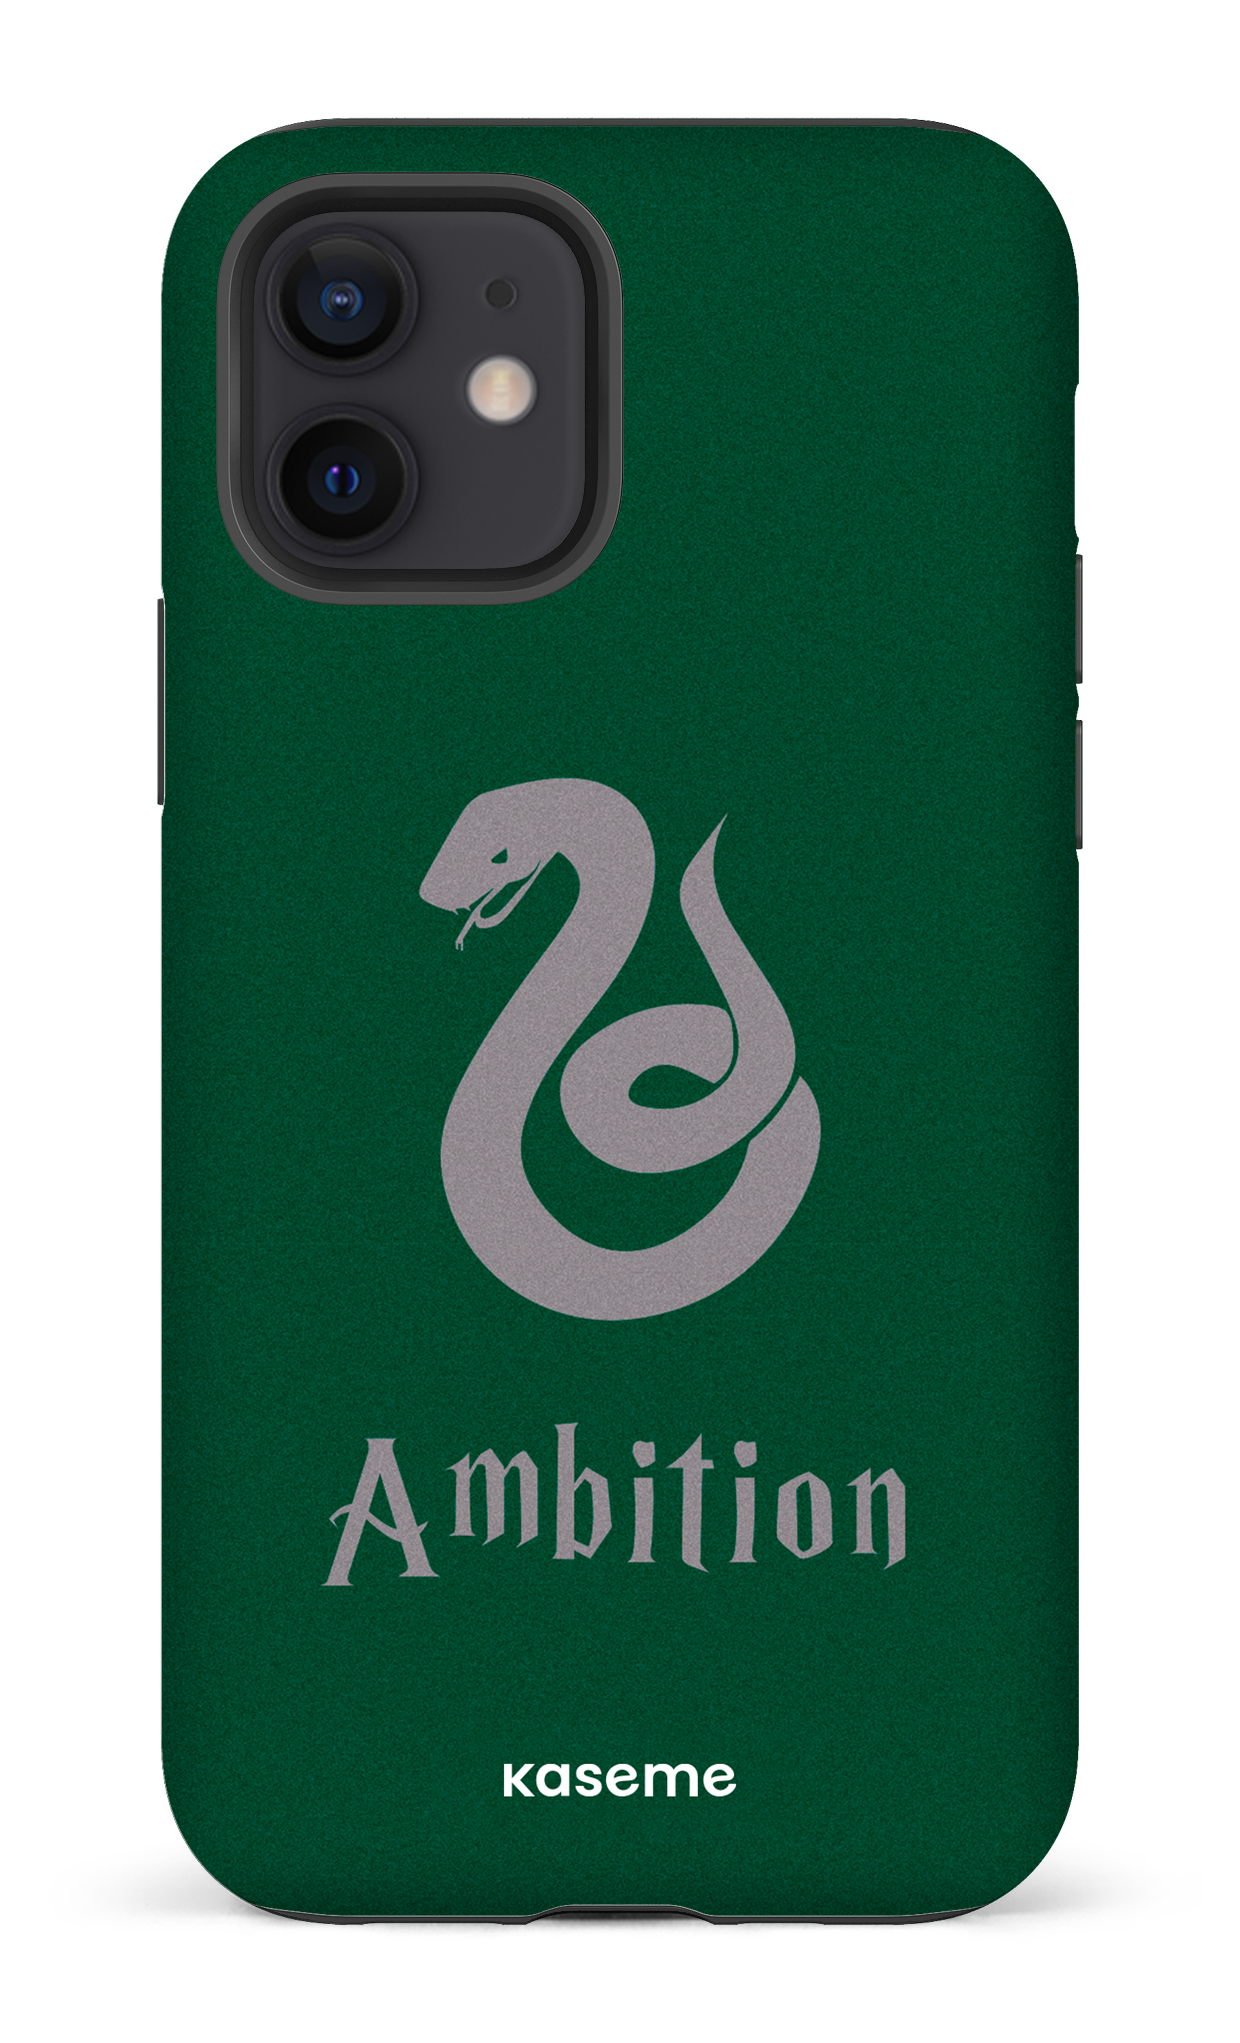 Ambition - iPhone 12